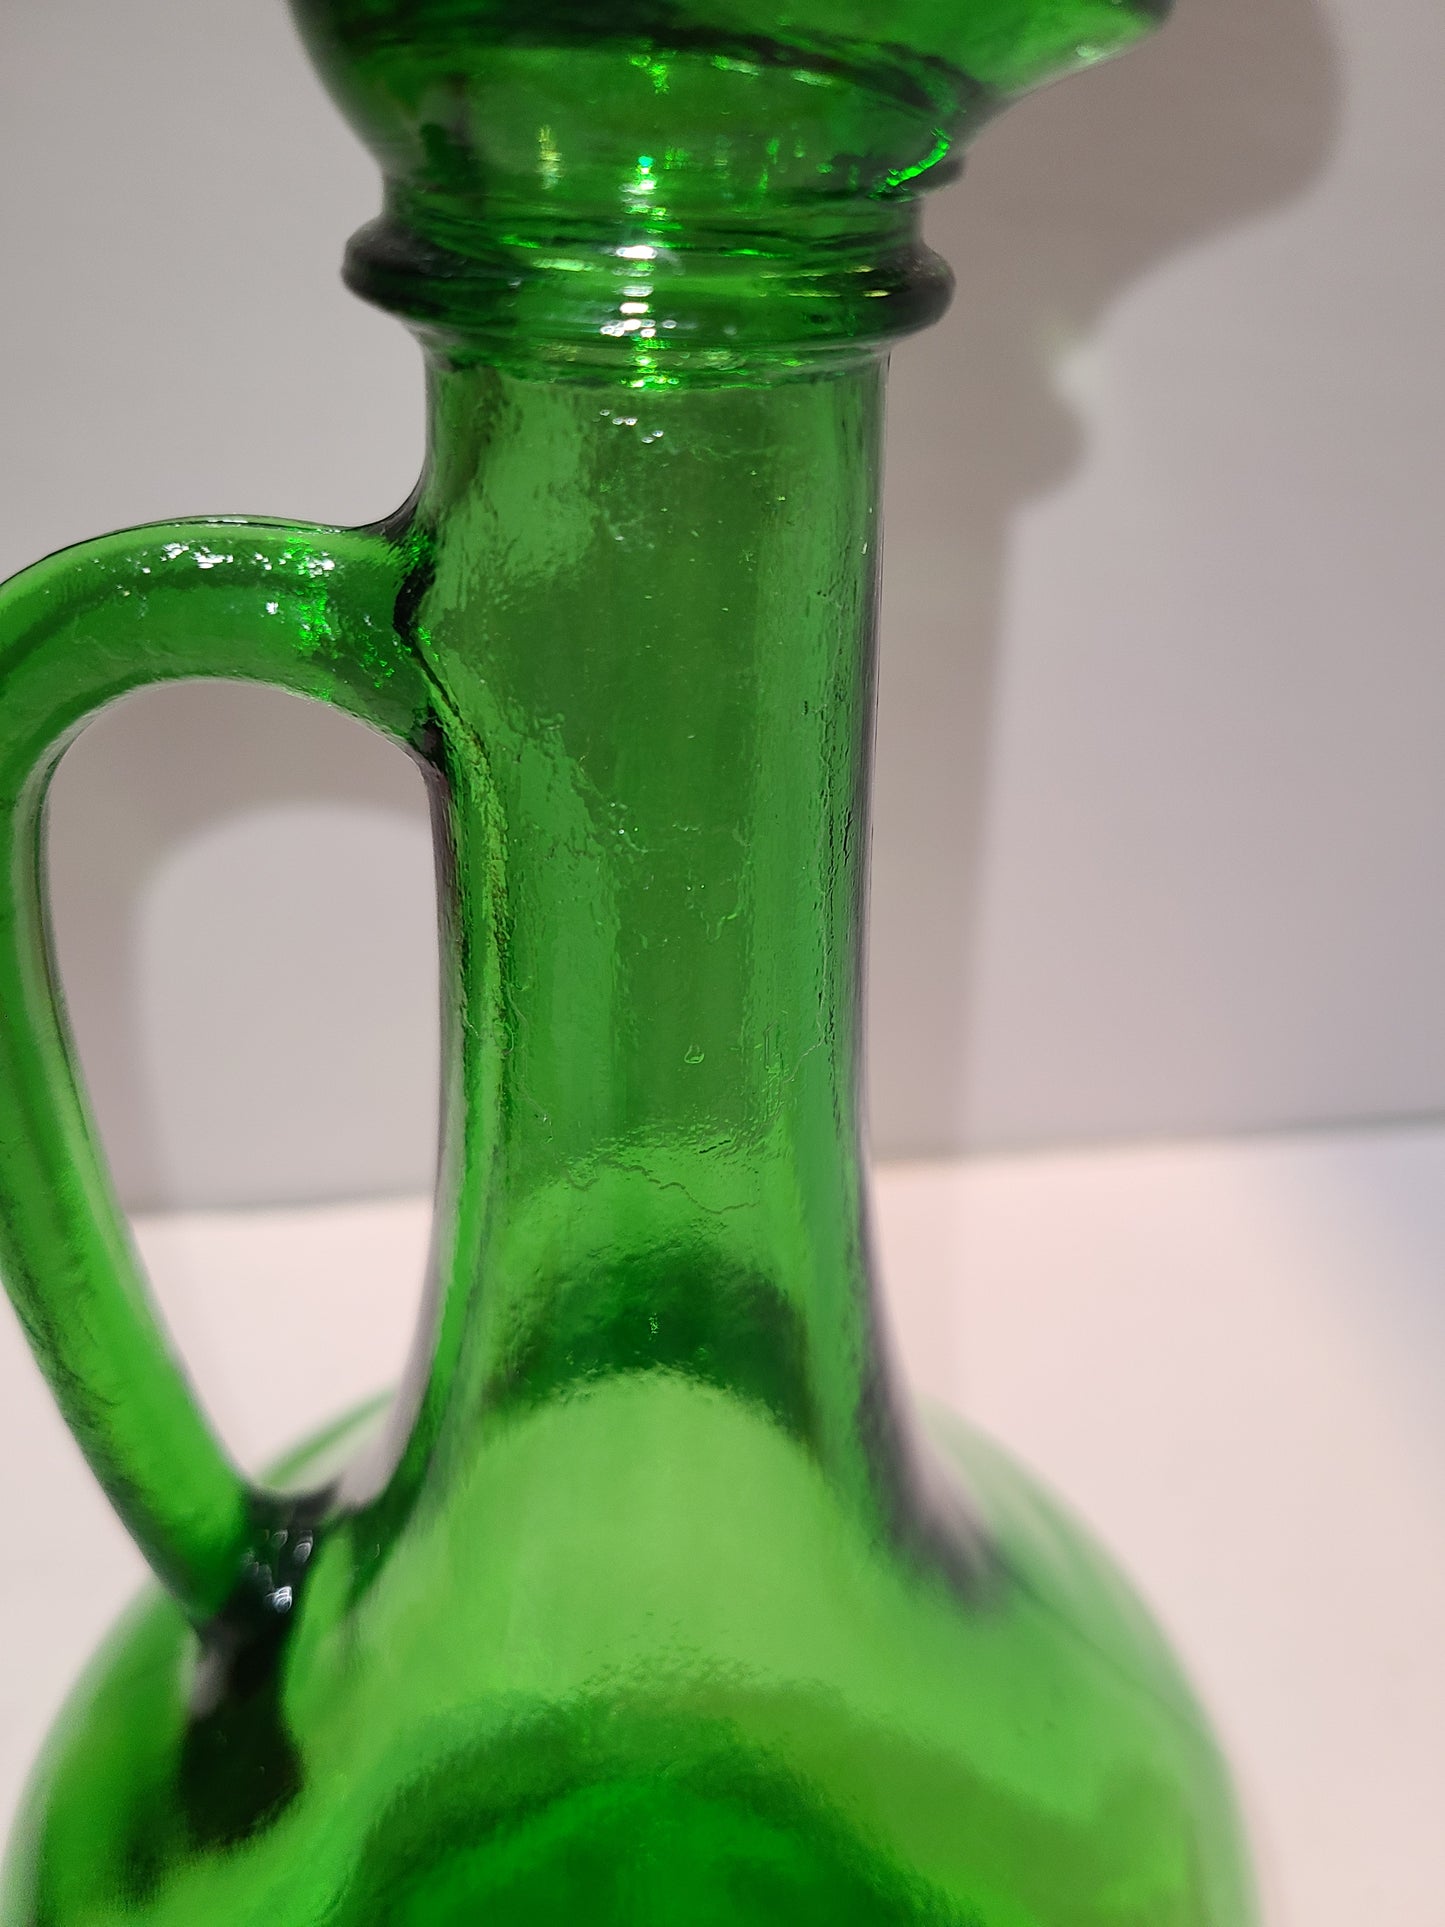 Vintage green glass decanter